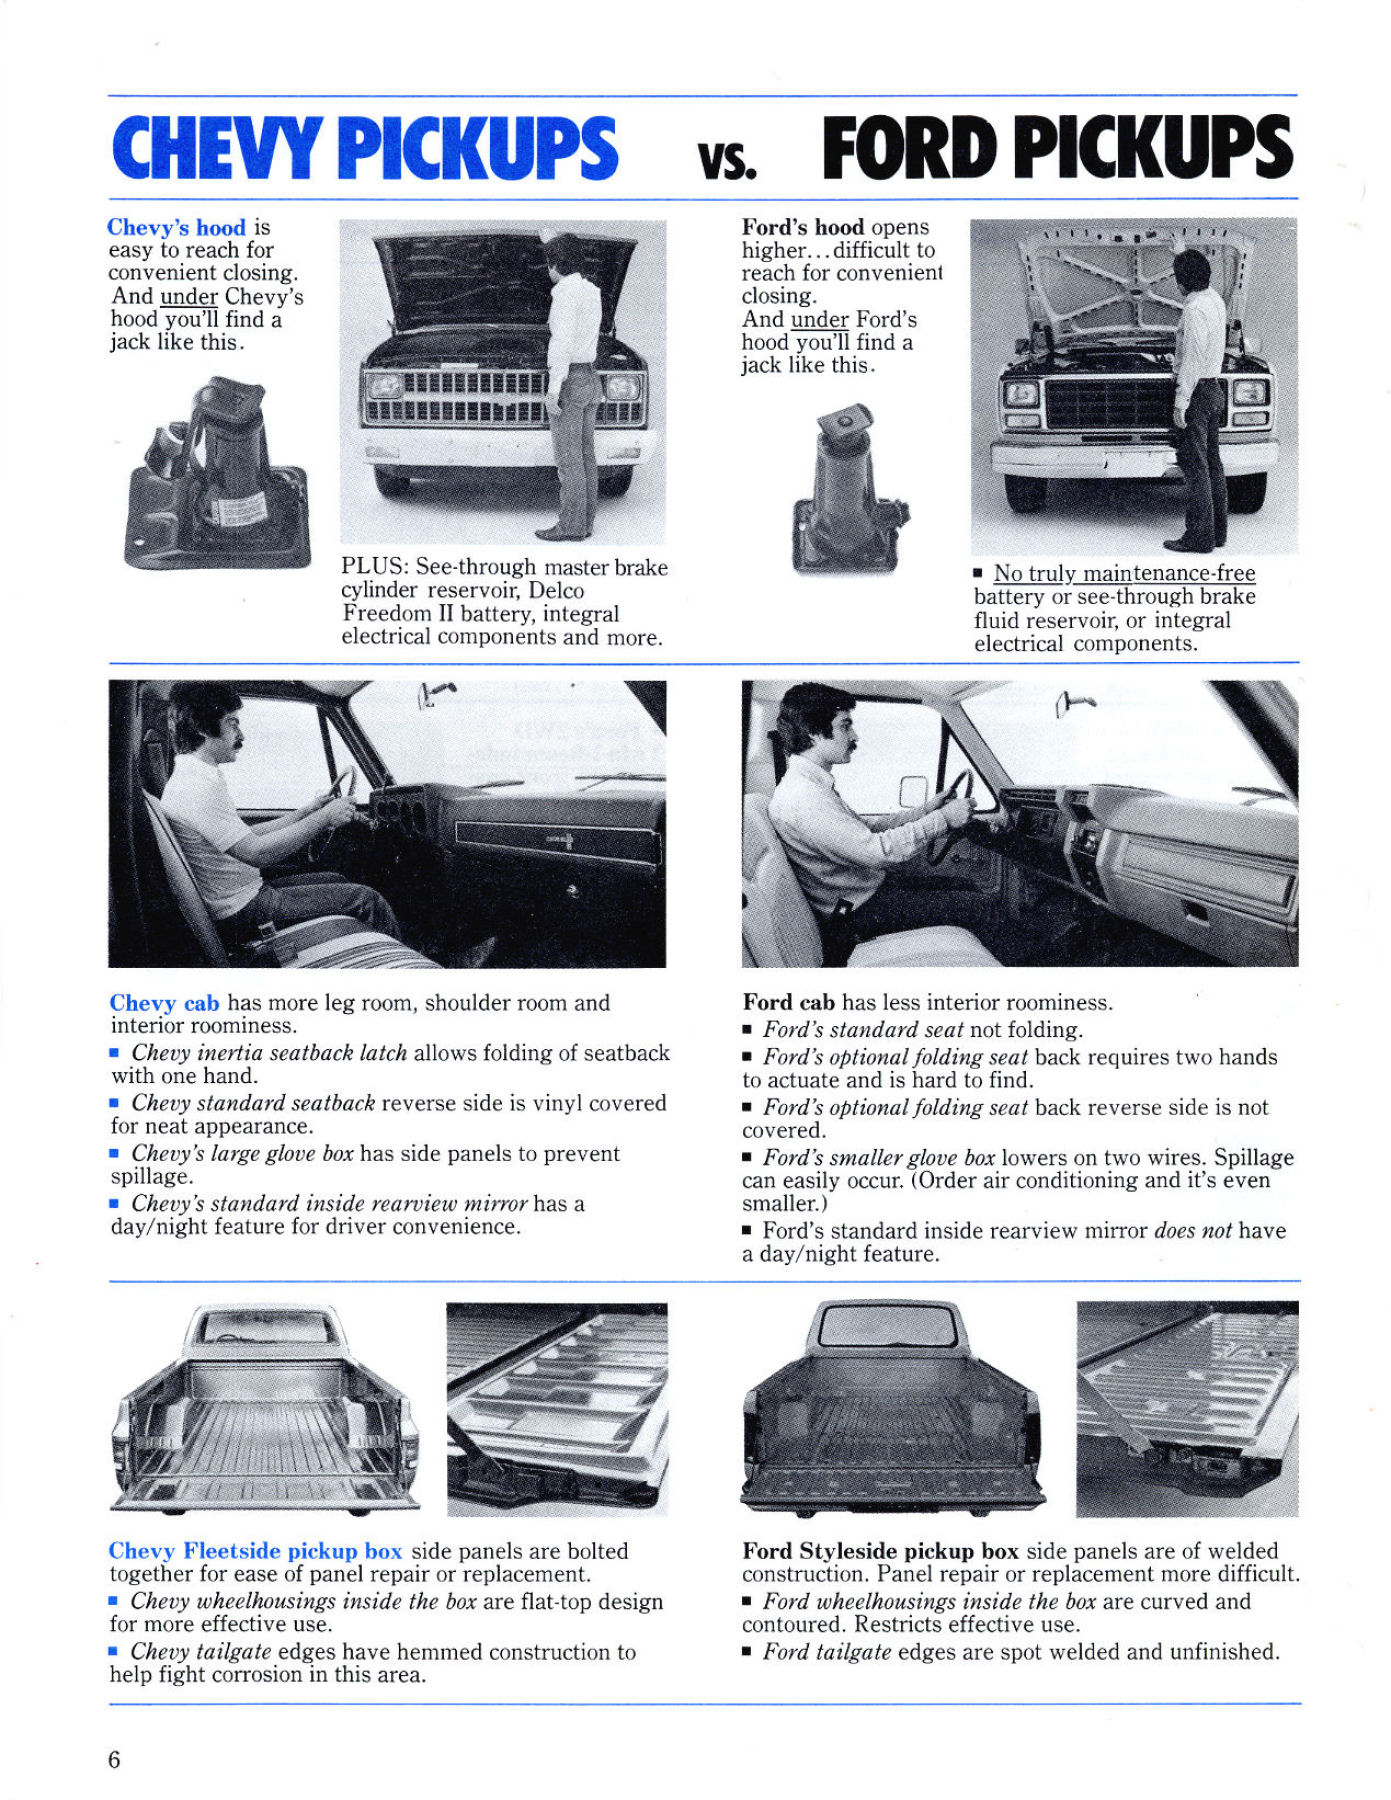 1981_Chevrolet_vs_Ford_Pickups-06